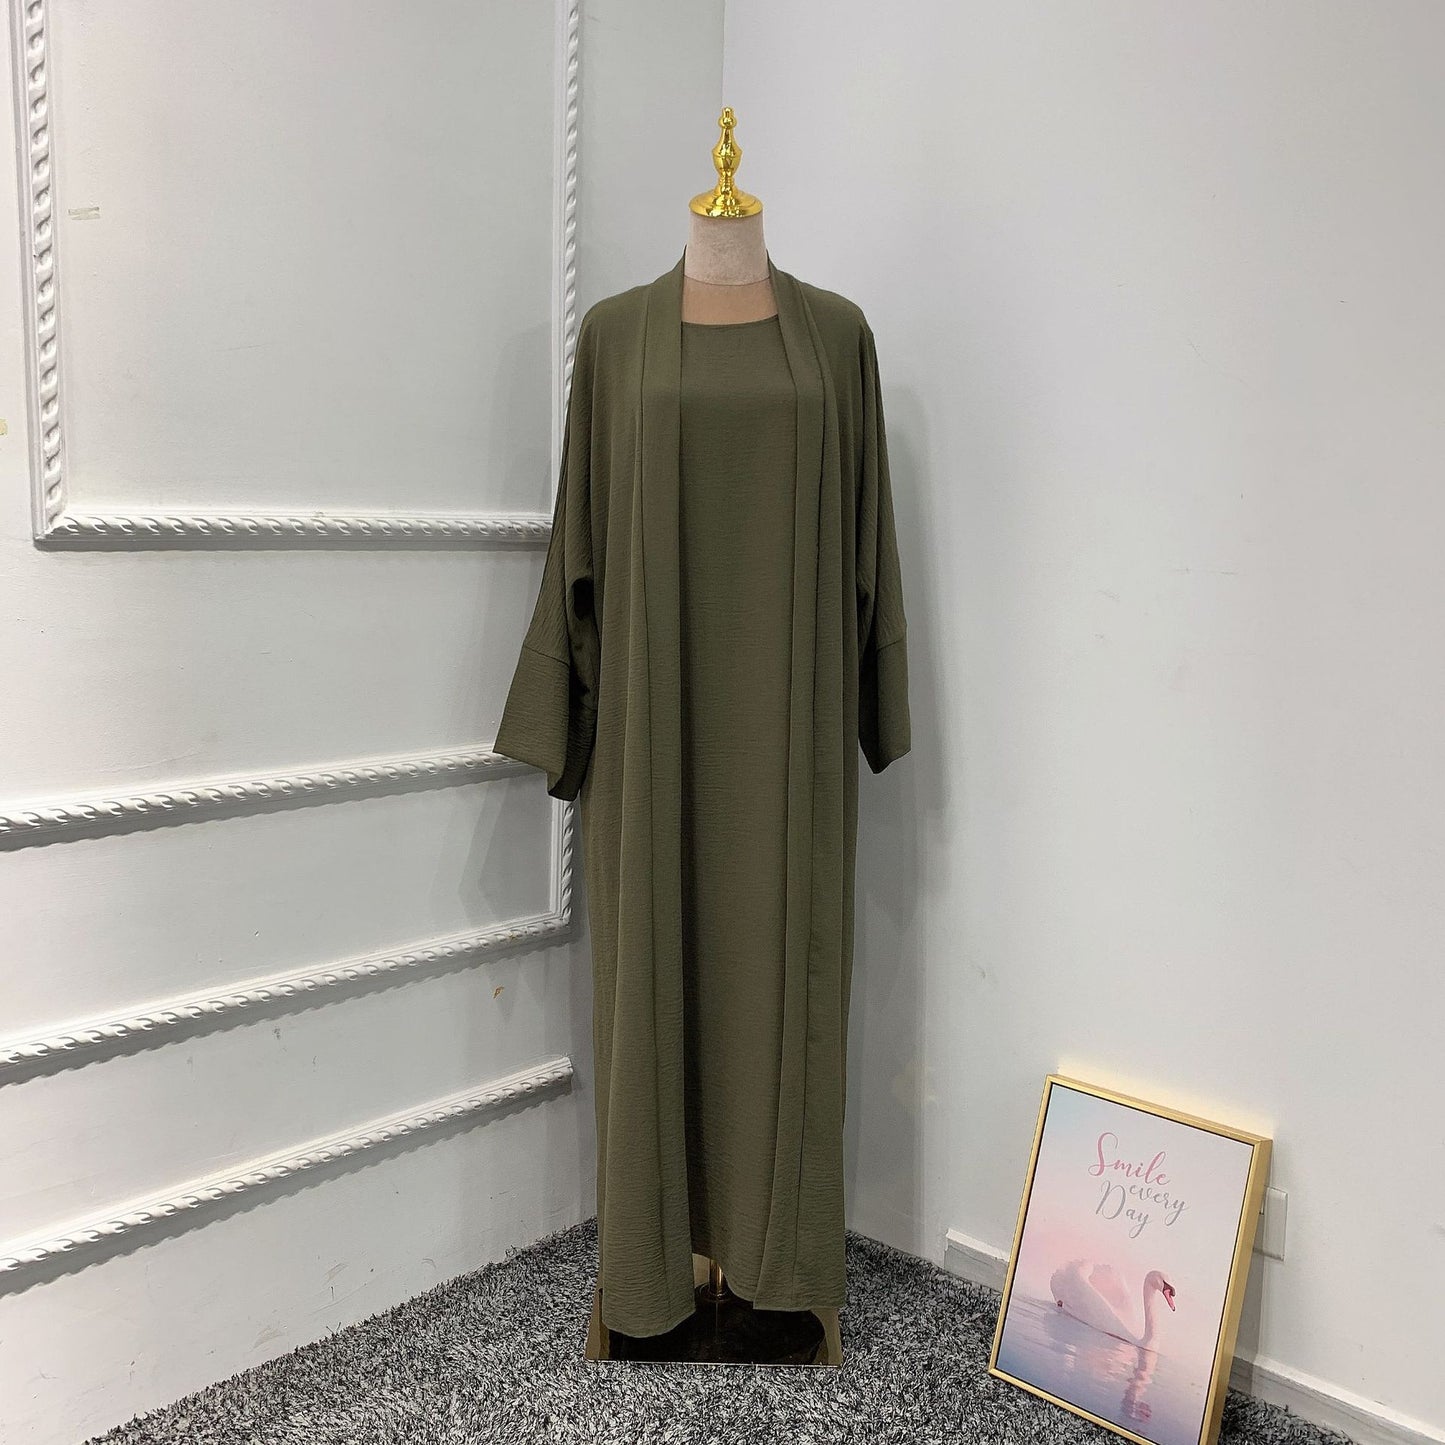 2 Piece Abaya Muslim Sets Hijab Modest Dress For Women